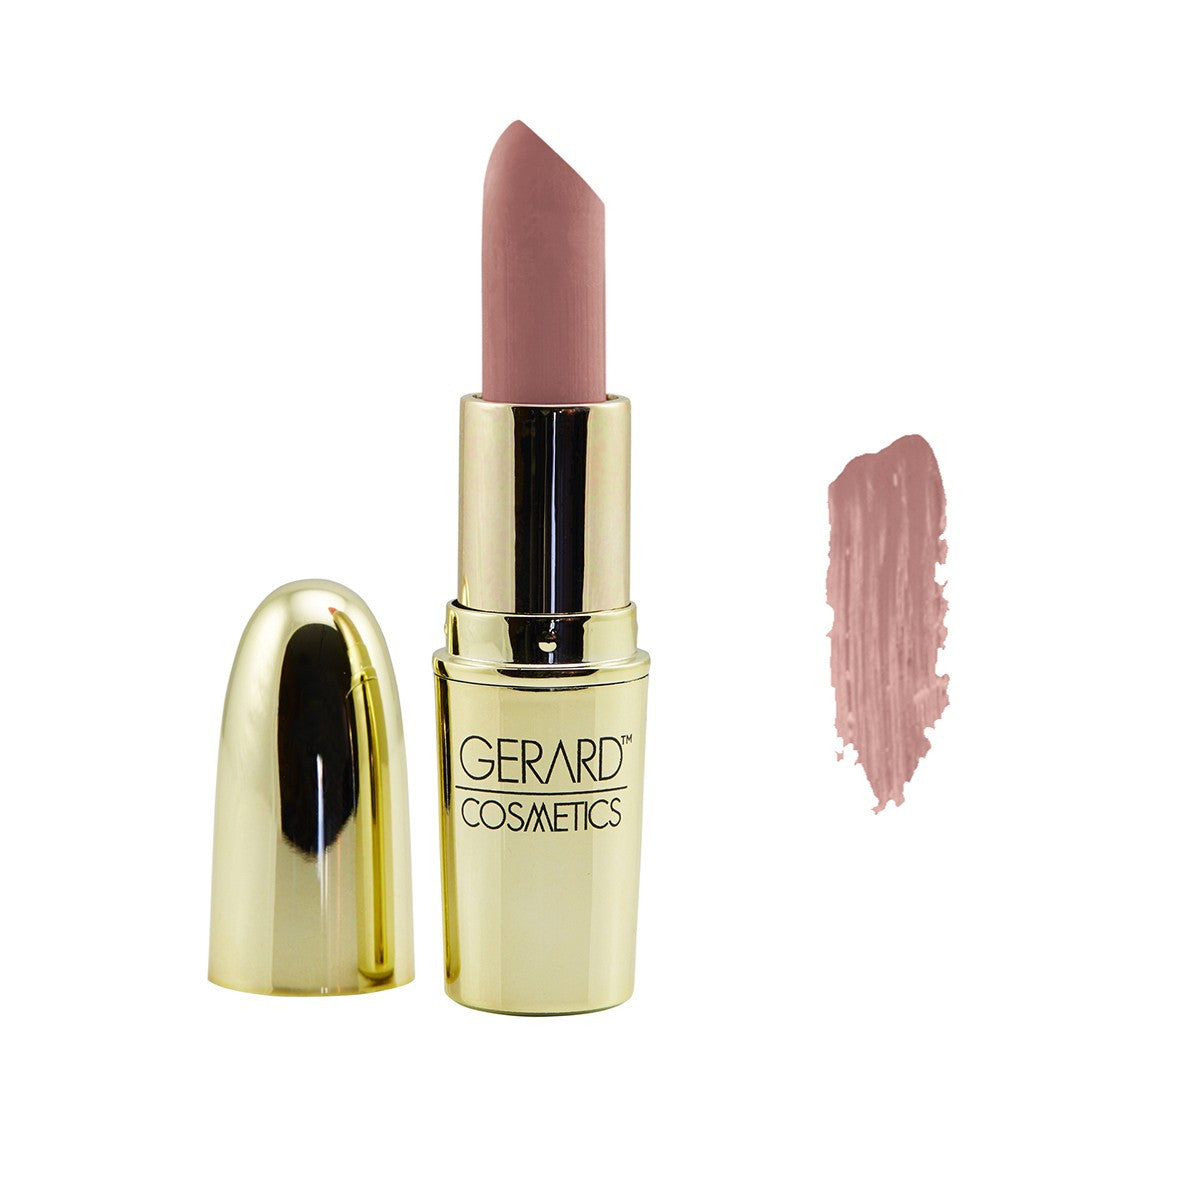 Gerard Cosmetics Lipstick 'Buttercup'